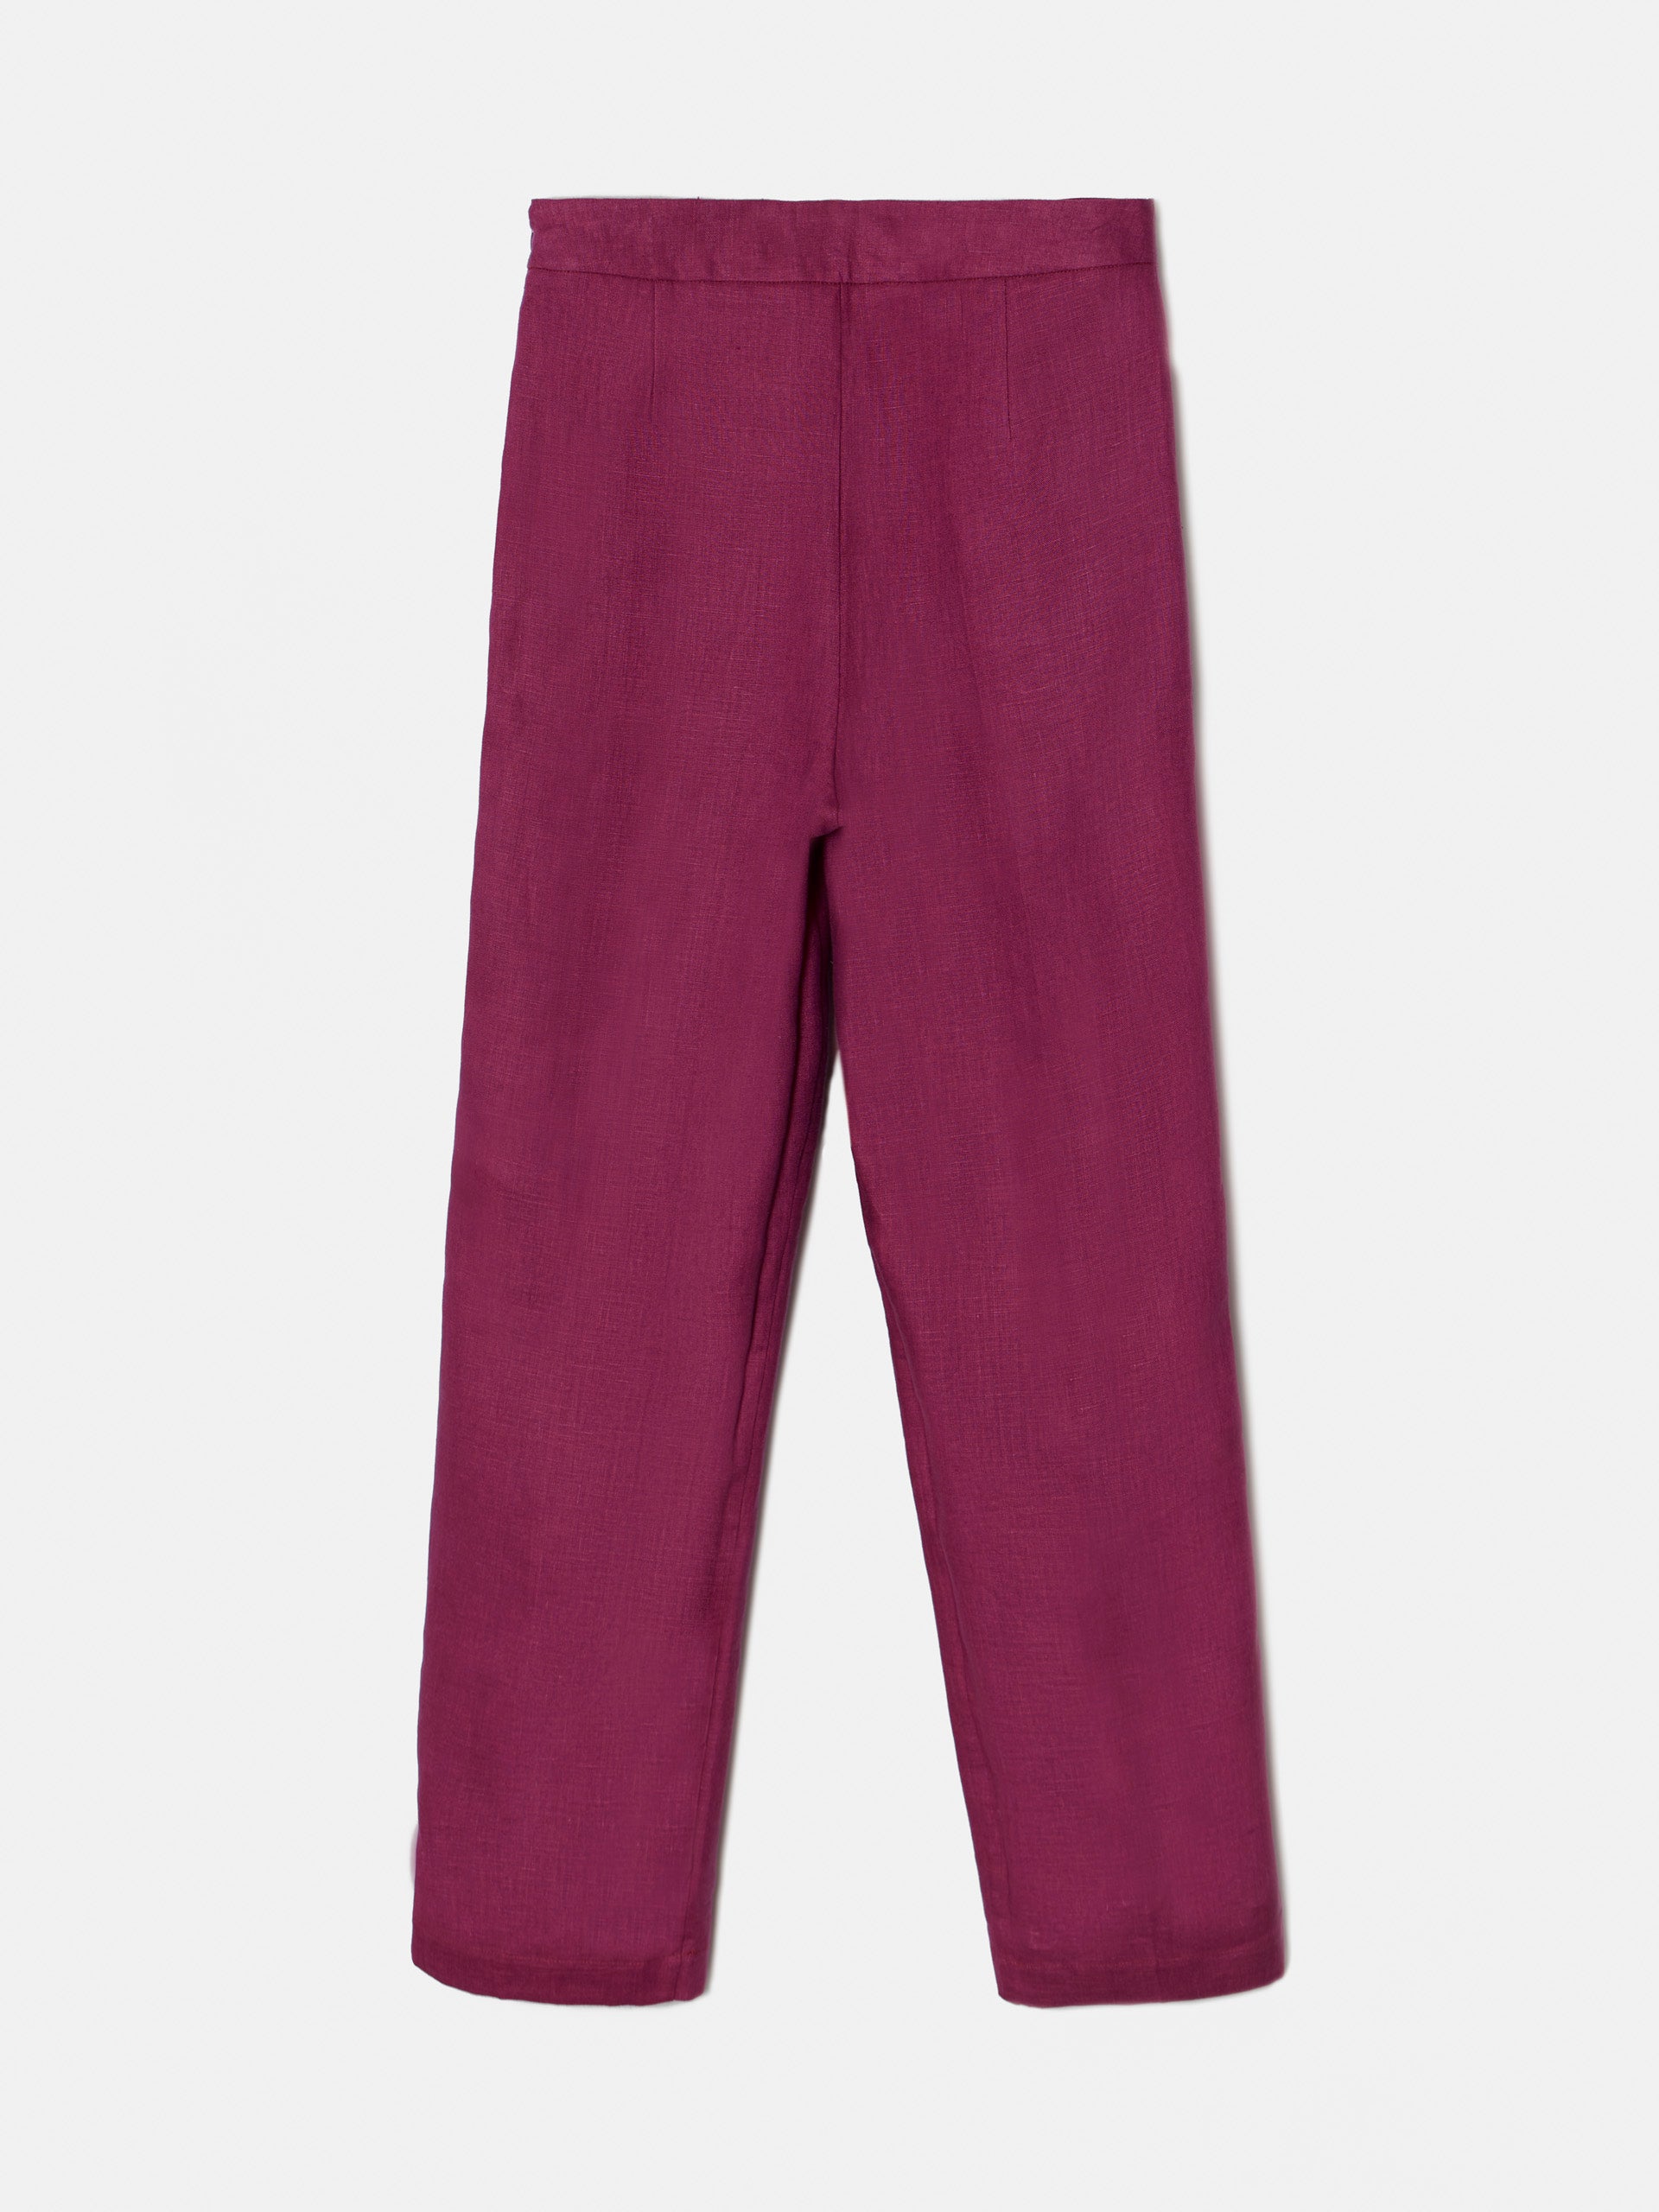 Raspberry linen pants